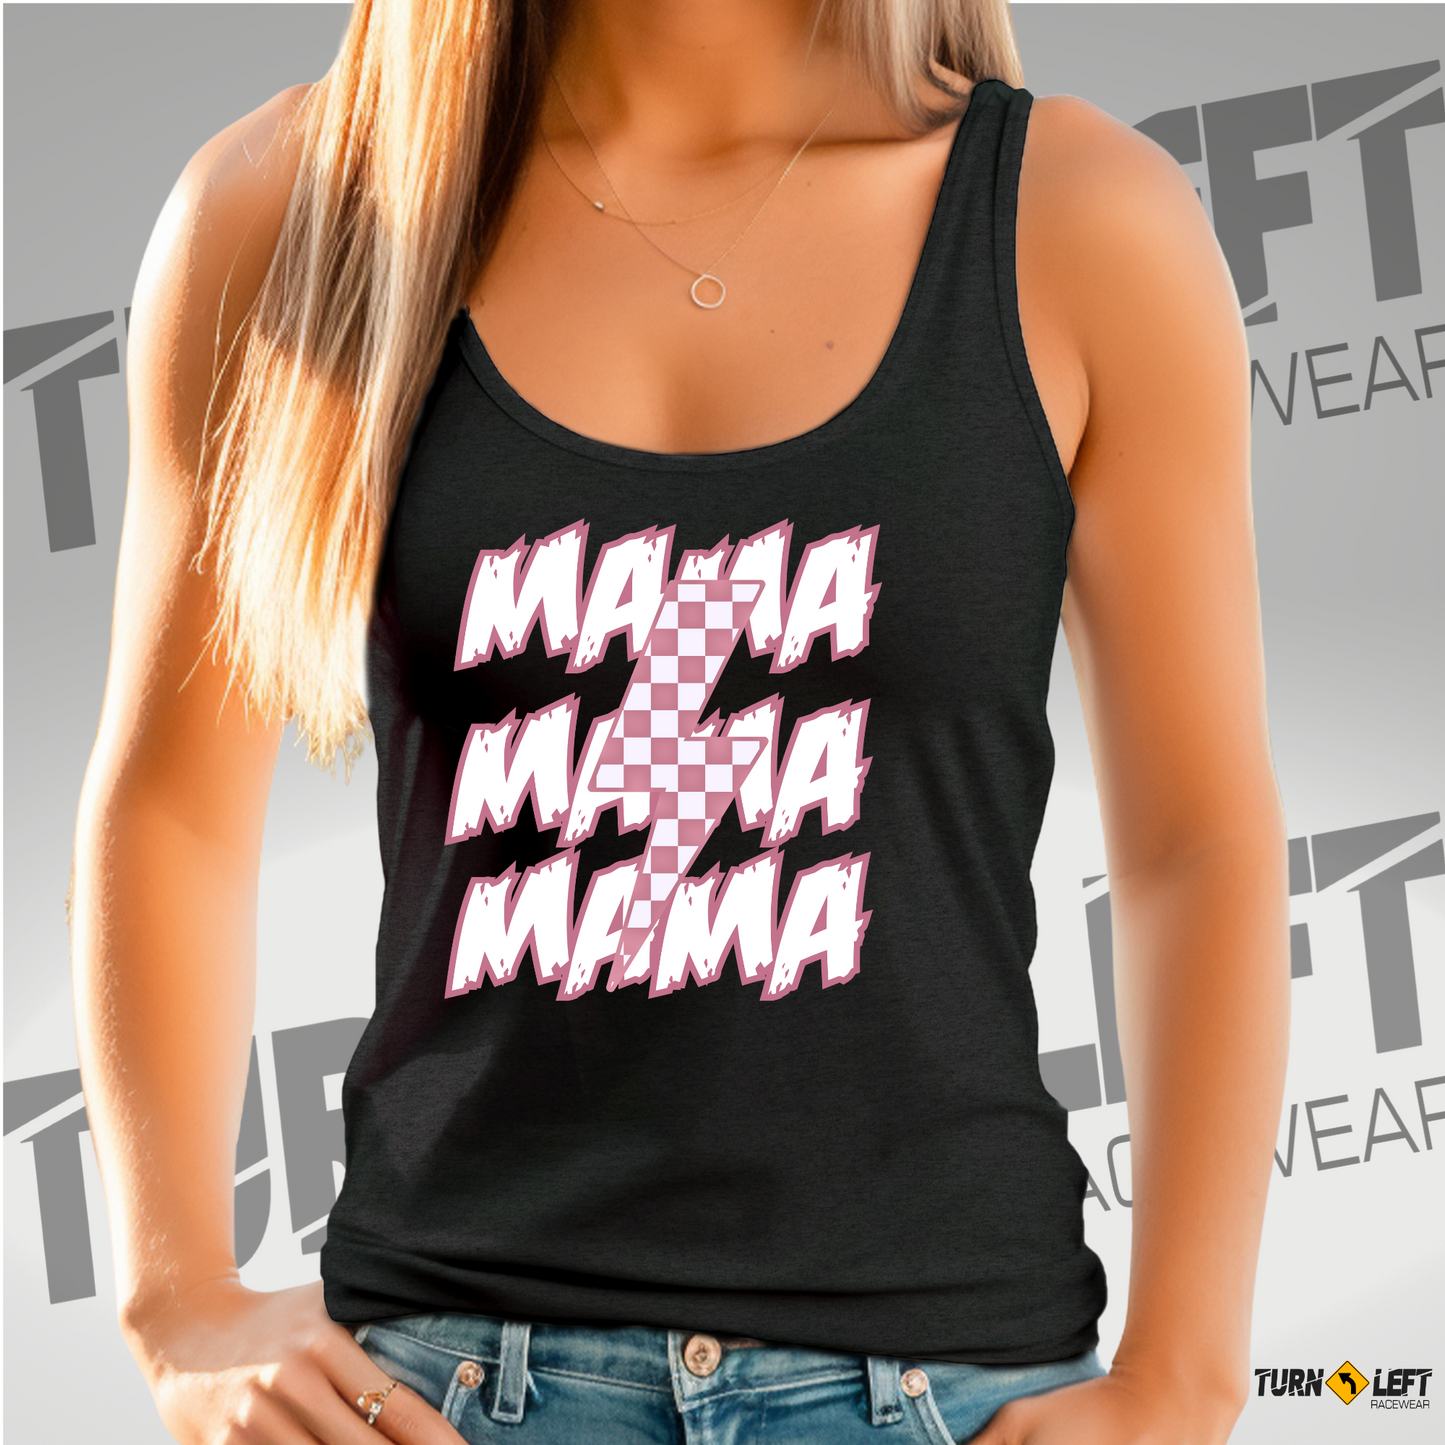 Mama Racing Shirts, Checker flag lightning bolt tank tops, Race Mom Tank Tops. Pink and white checker flag shirts